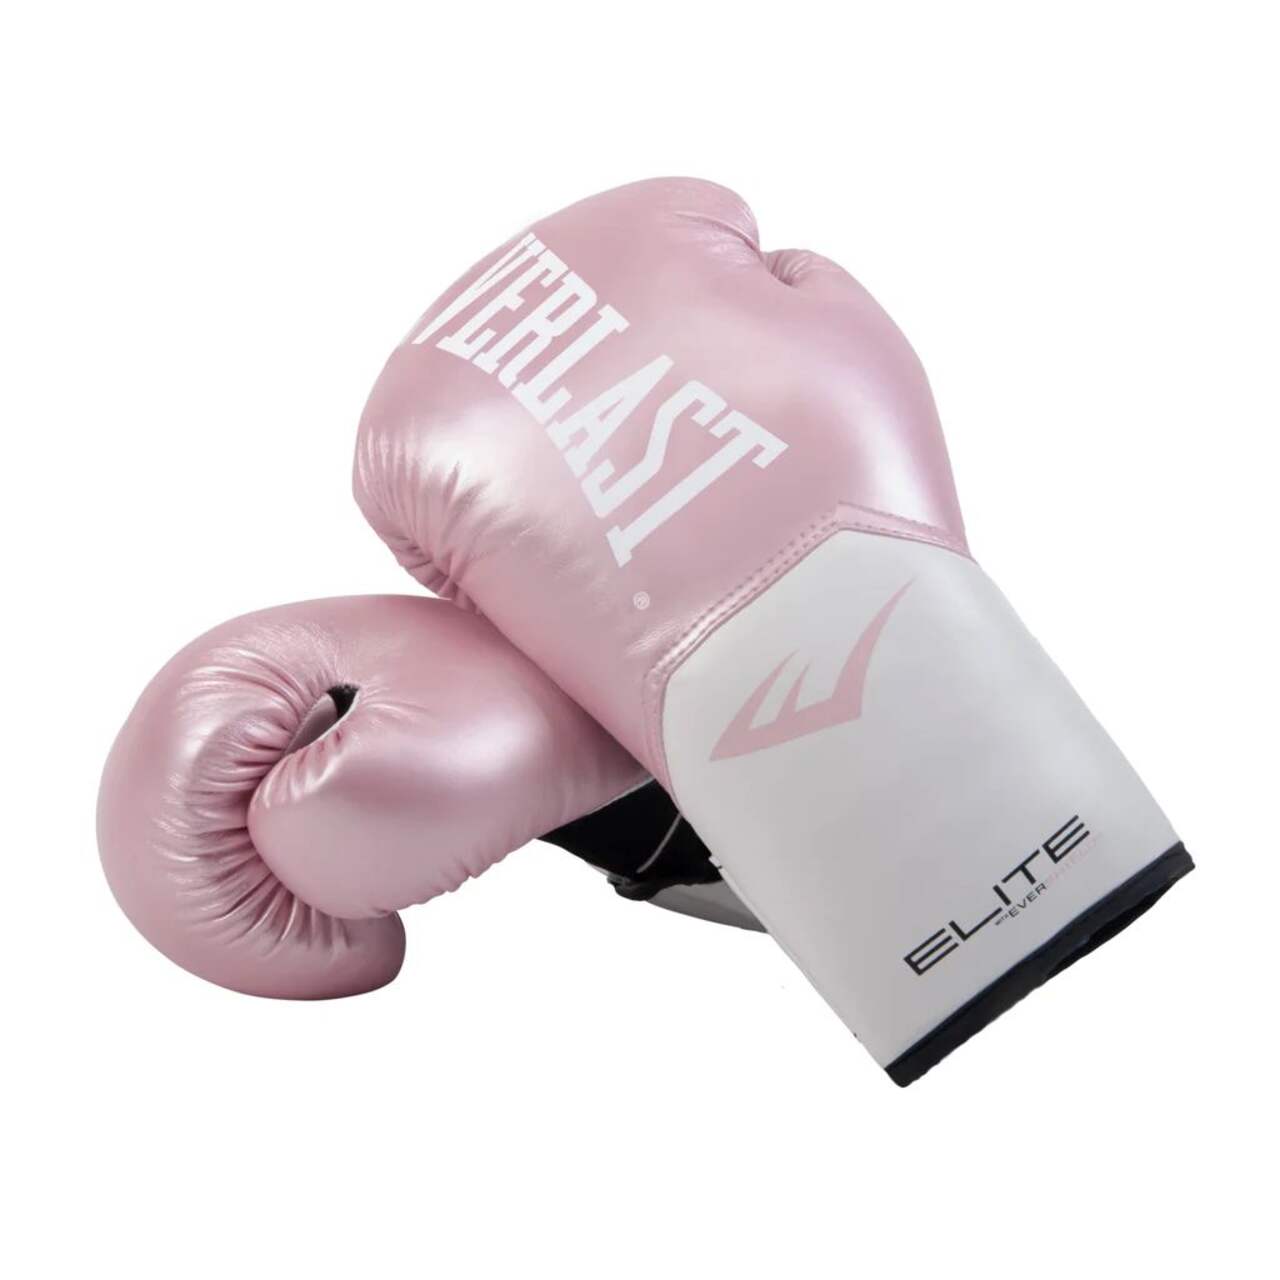 Everlast Elite 2.0 Boxing Gloves, Navy/Pink, 12-oz